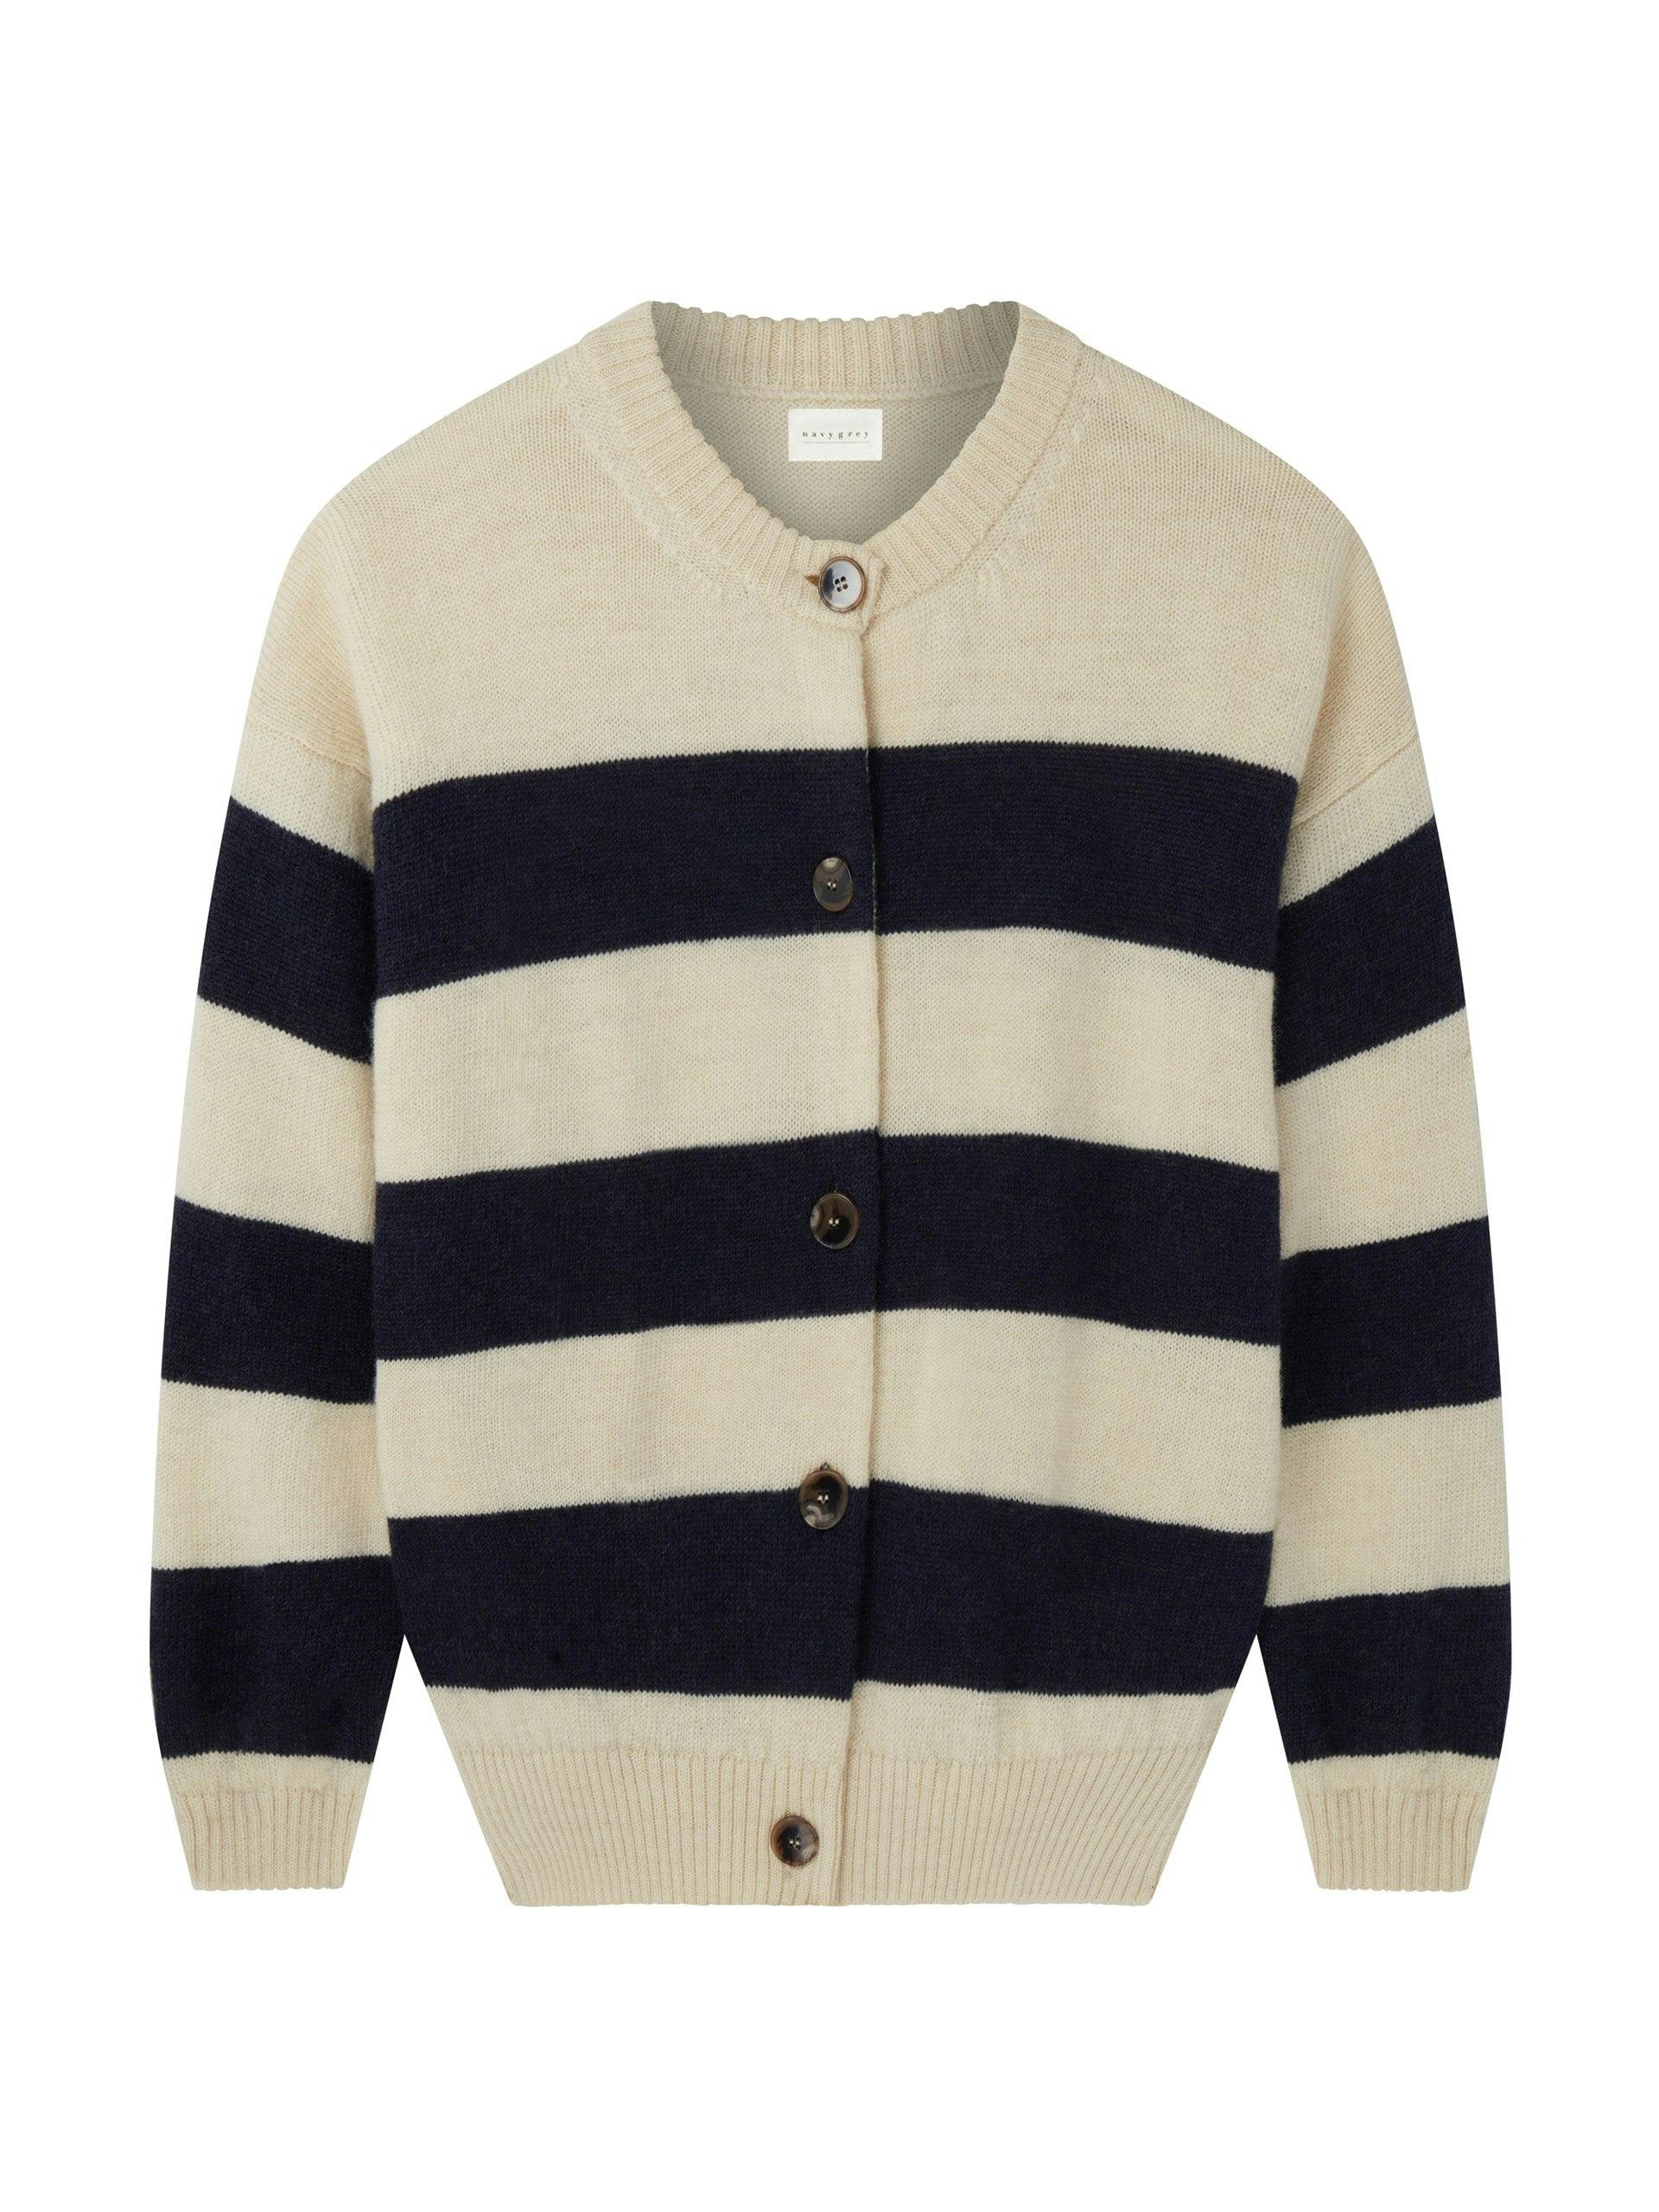 Undyed ecru and navy stripe wool Field cardigan